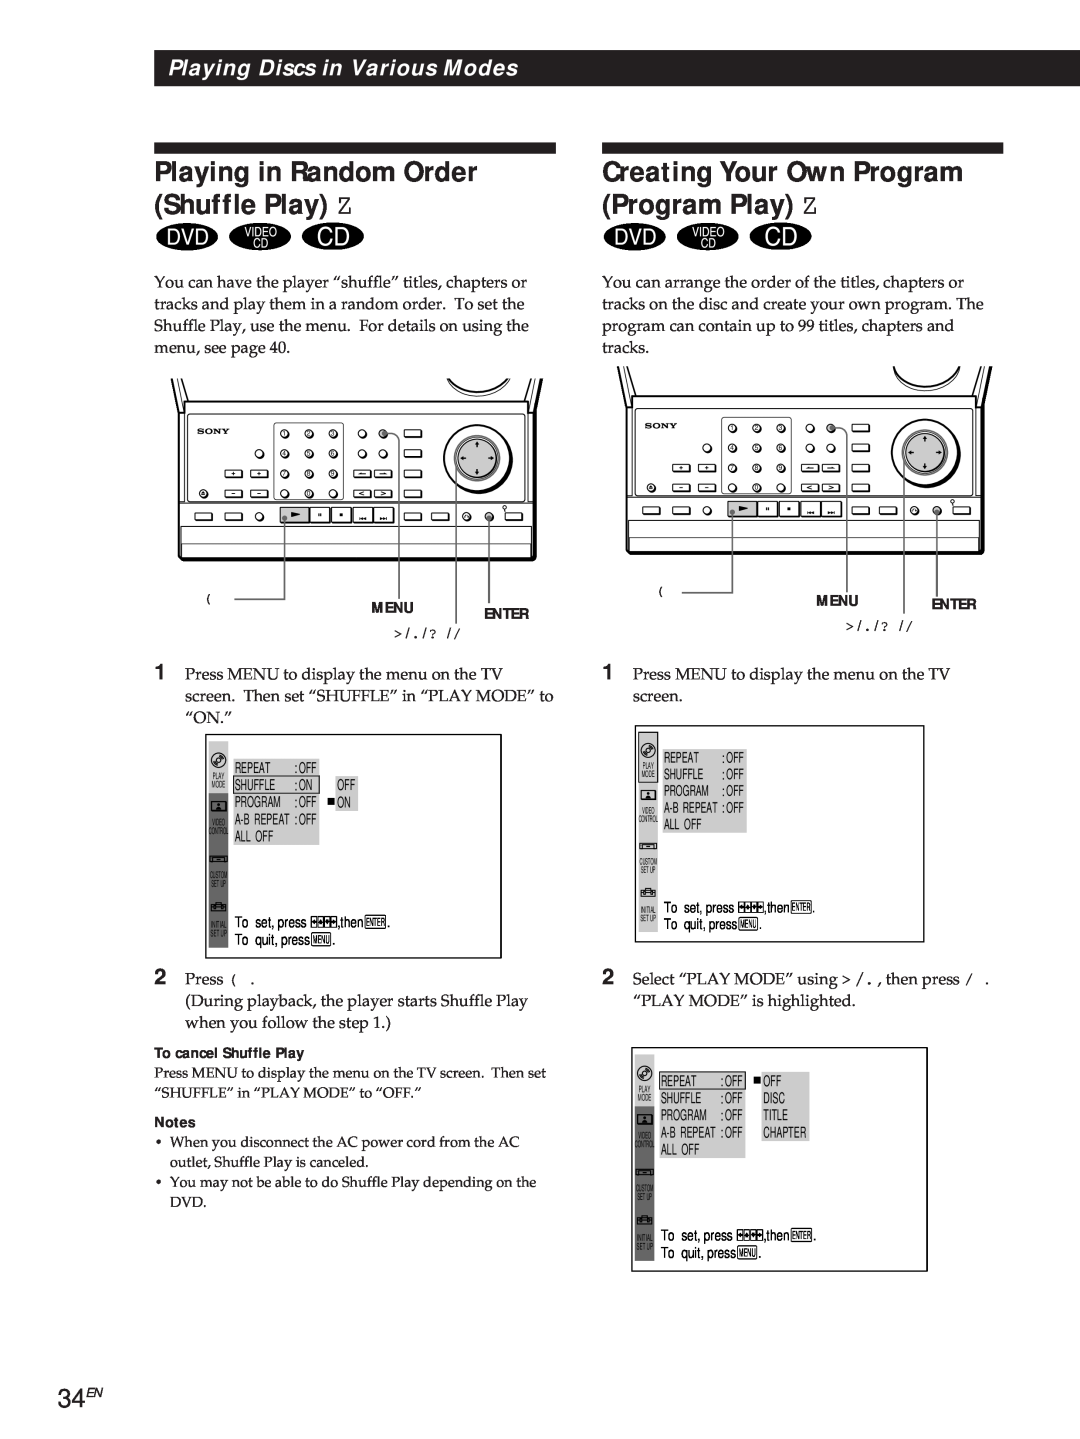 Sony DVP3980 manual Playing in Random Order Shuffle Play Z, Creating Your Own Program Program Play Z, 34EN 